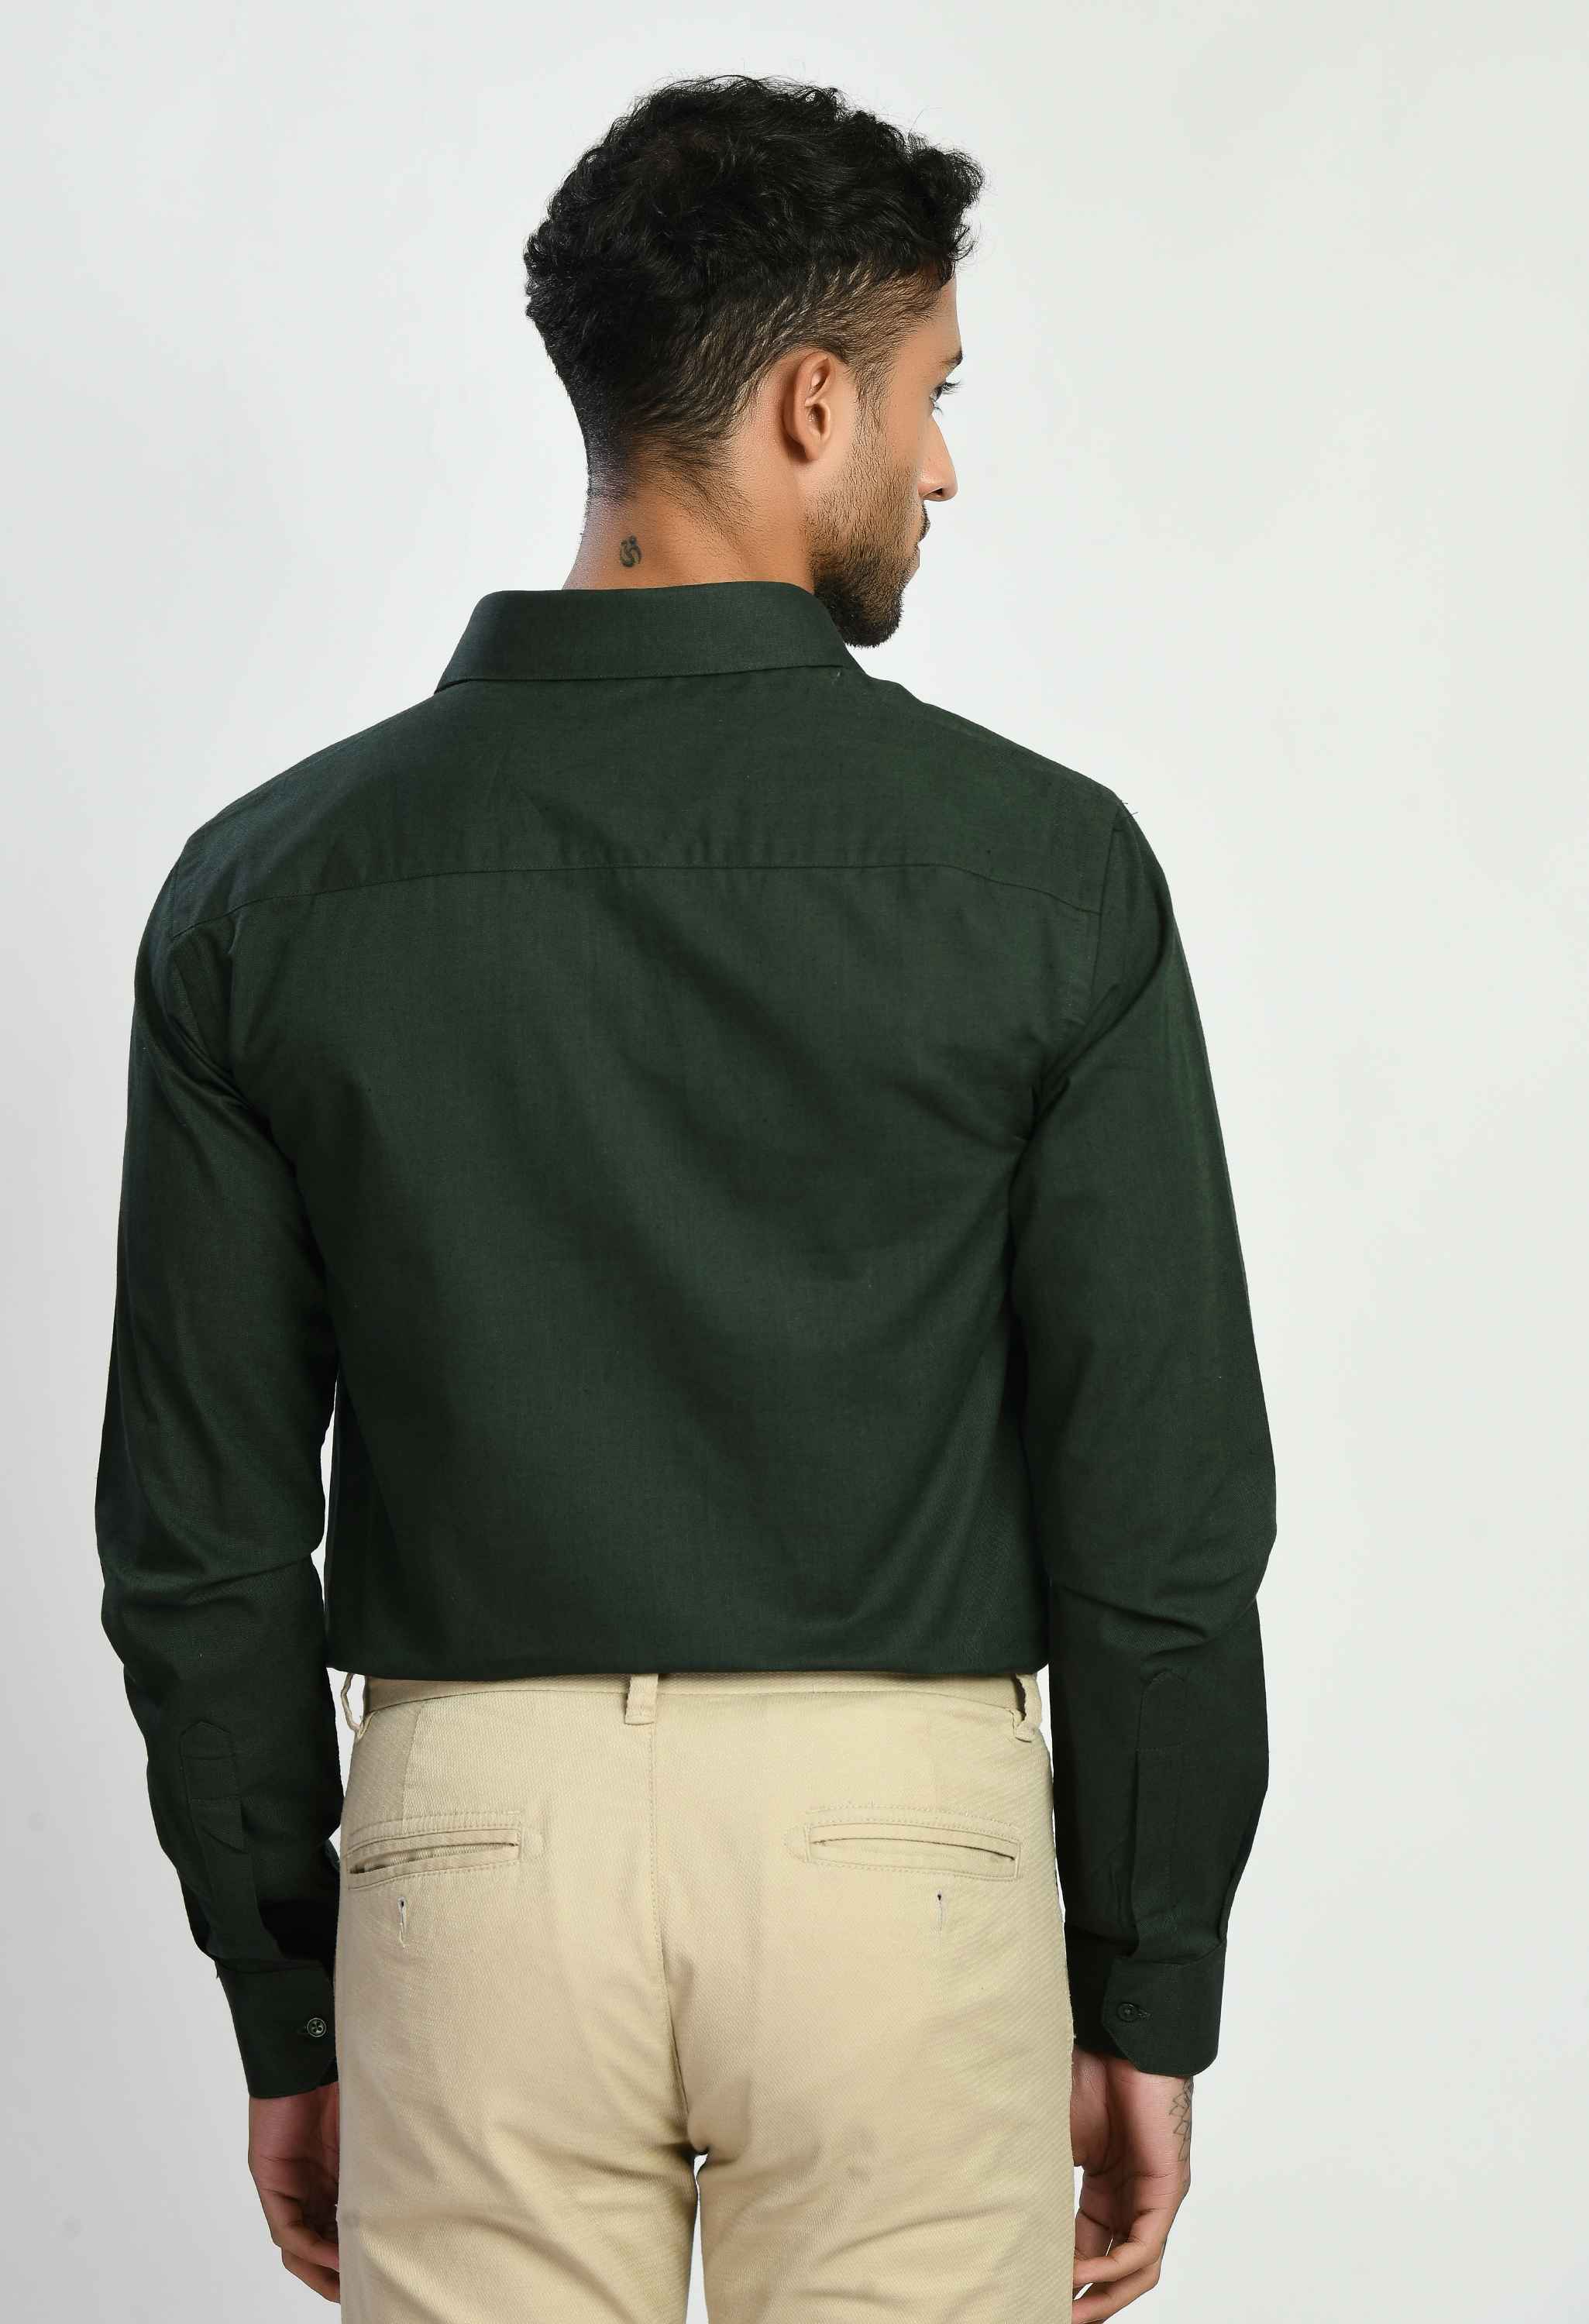 Men's Pine Green Spread Collar Solid Formal Shirt